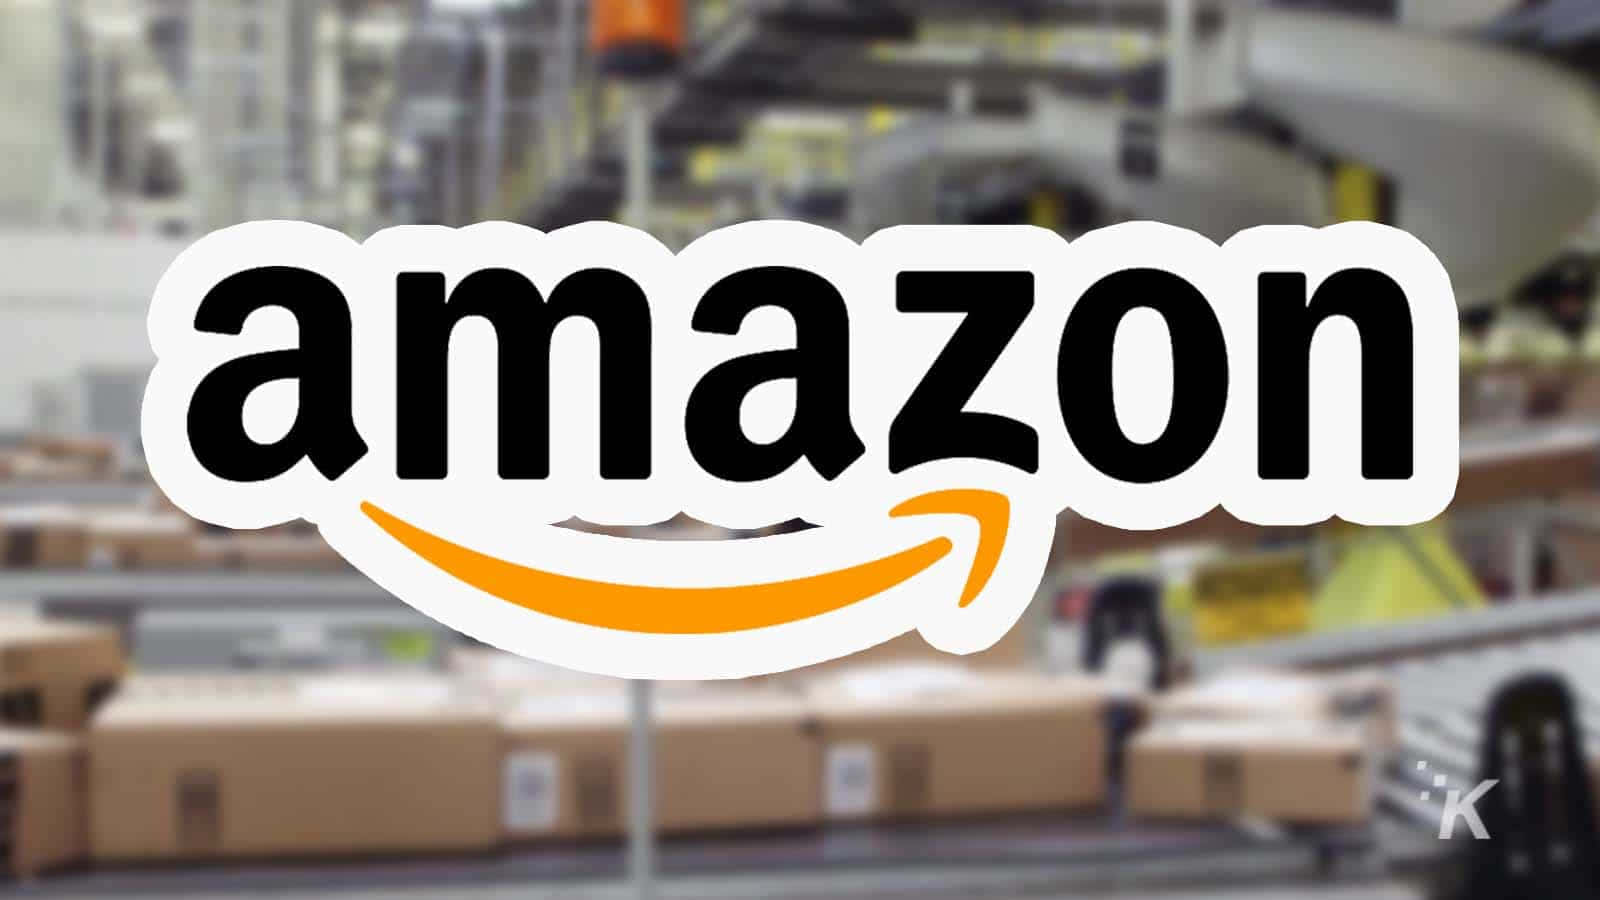 Download Amazon UK Logo Against Blurry Warehouse Wallpaper | Wallpapers.com